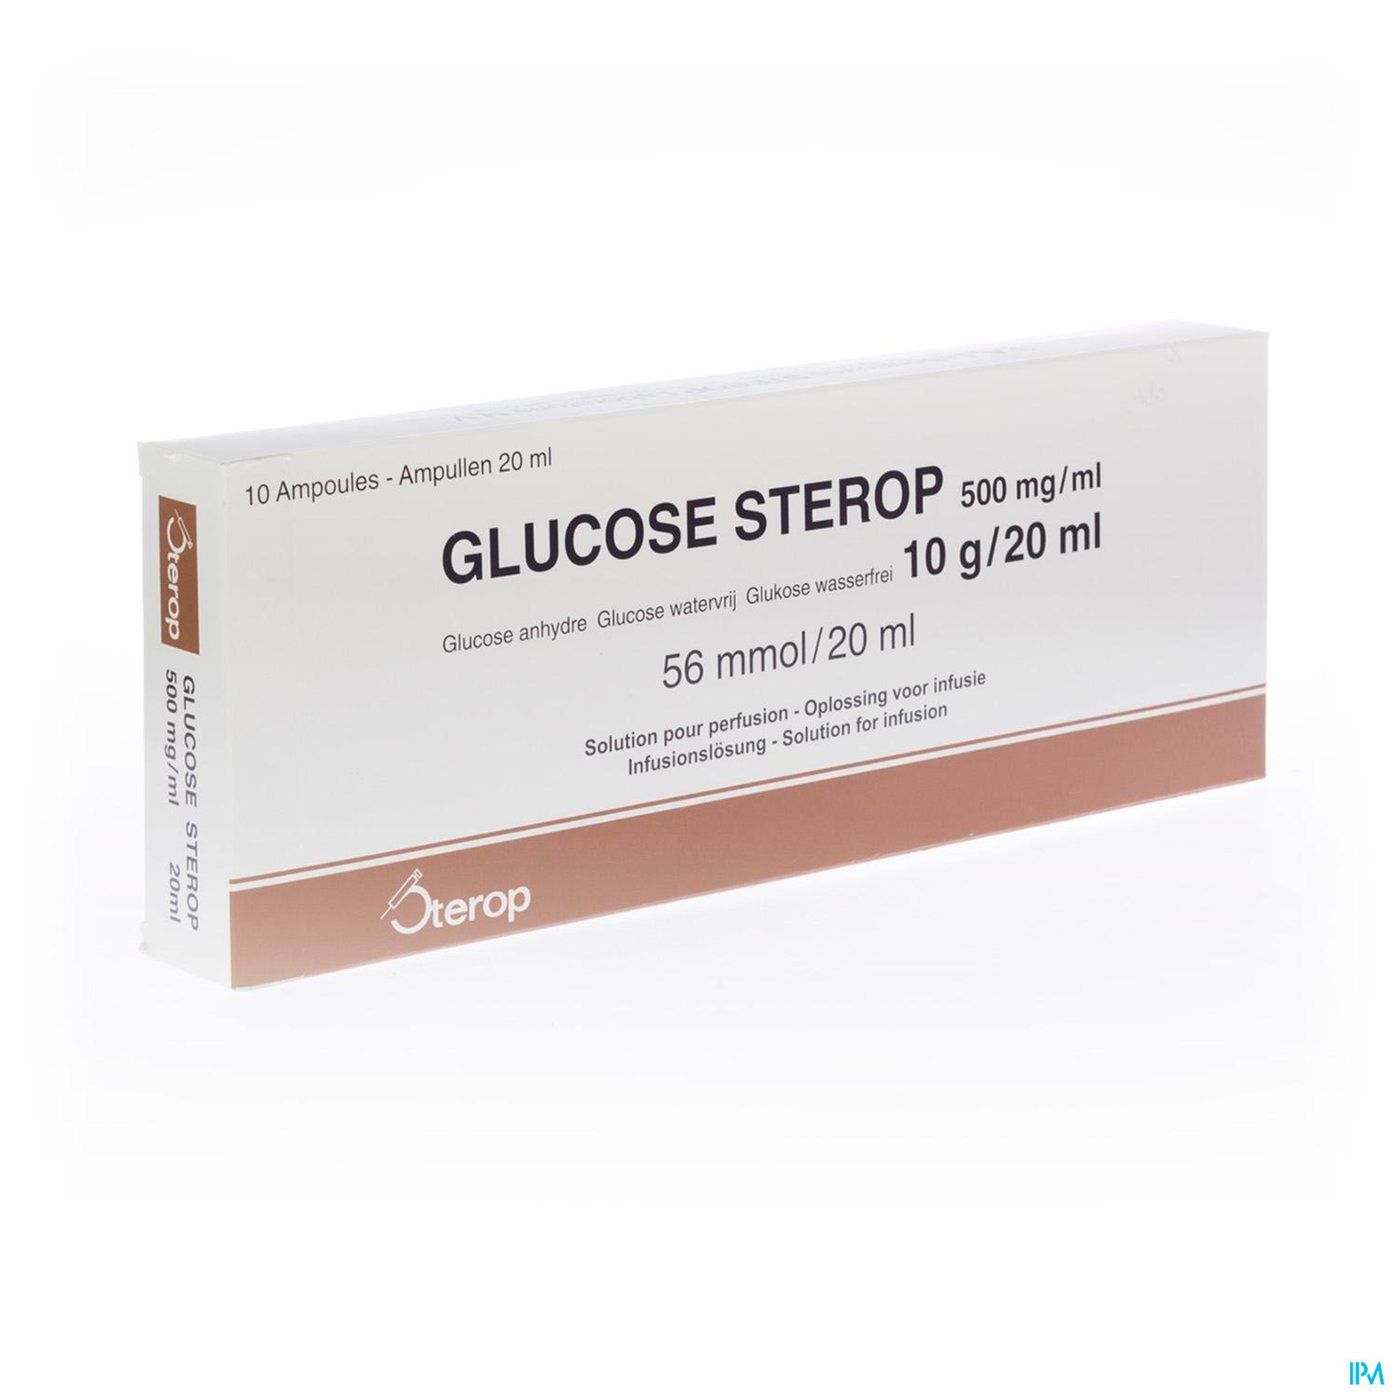 Glucose 50 % Sterop 10g/20ml 10